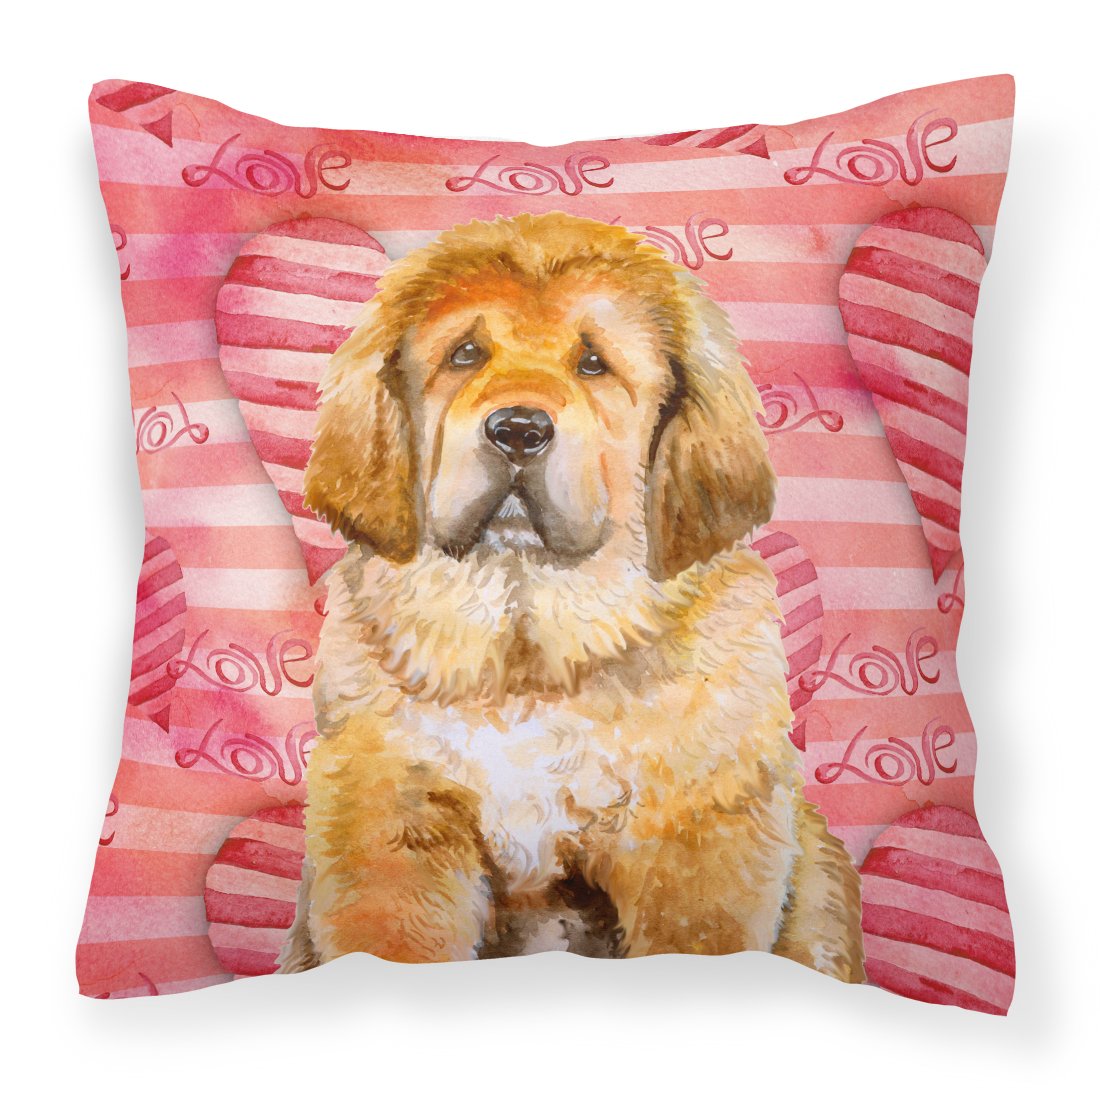 Tibetan Mastiff Love Fabric Decorative Pillow BB9808PW1818 by Caroline's Treasures